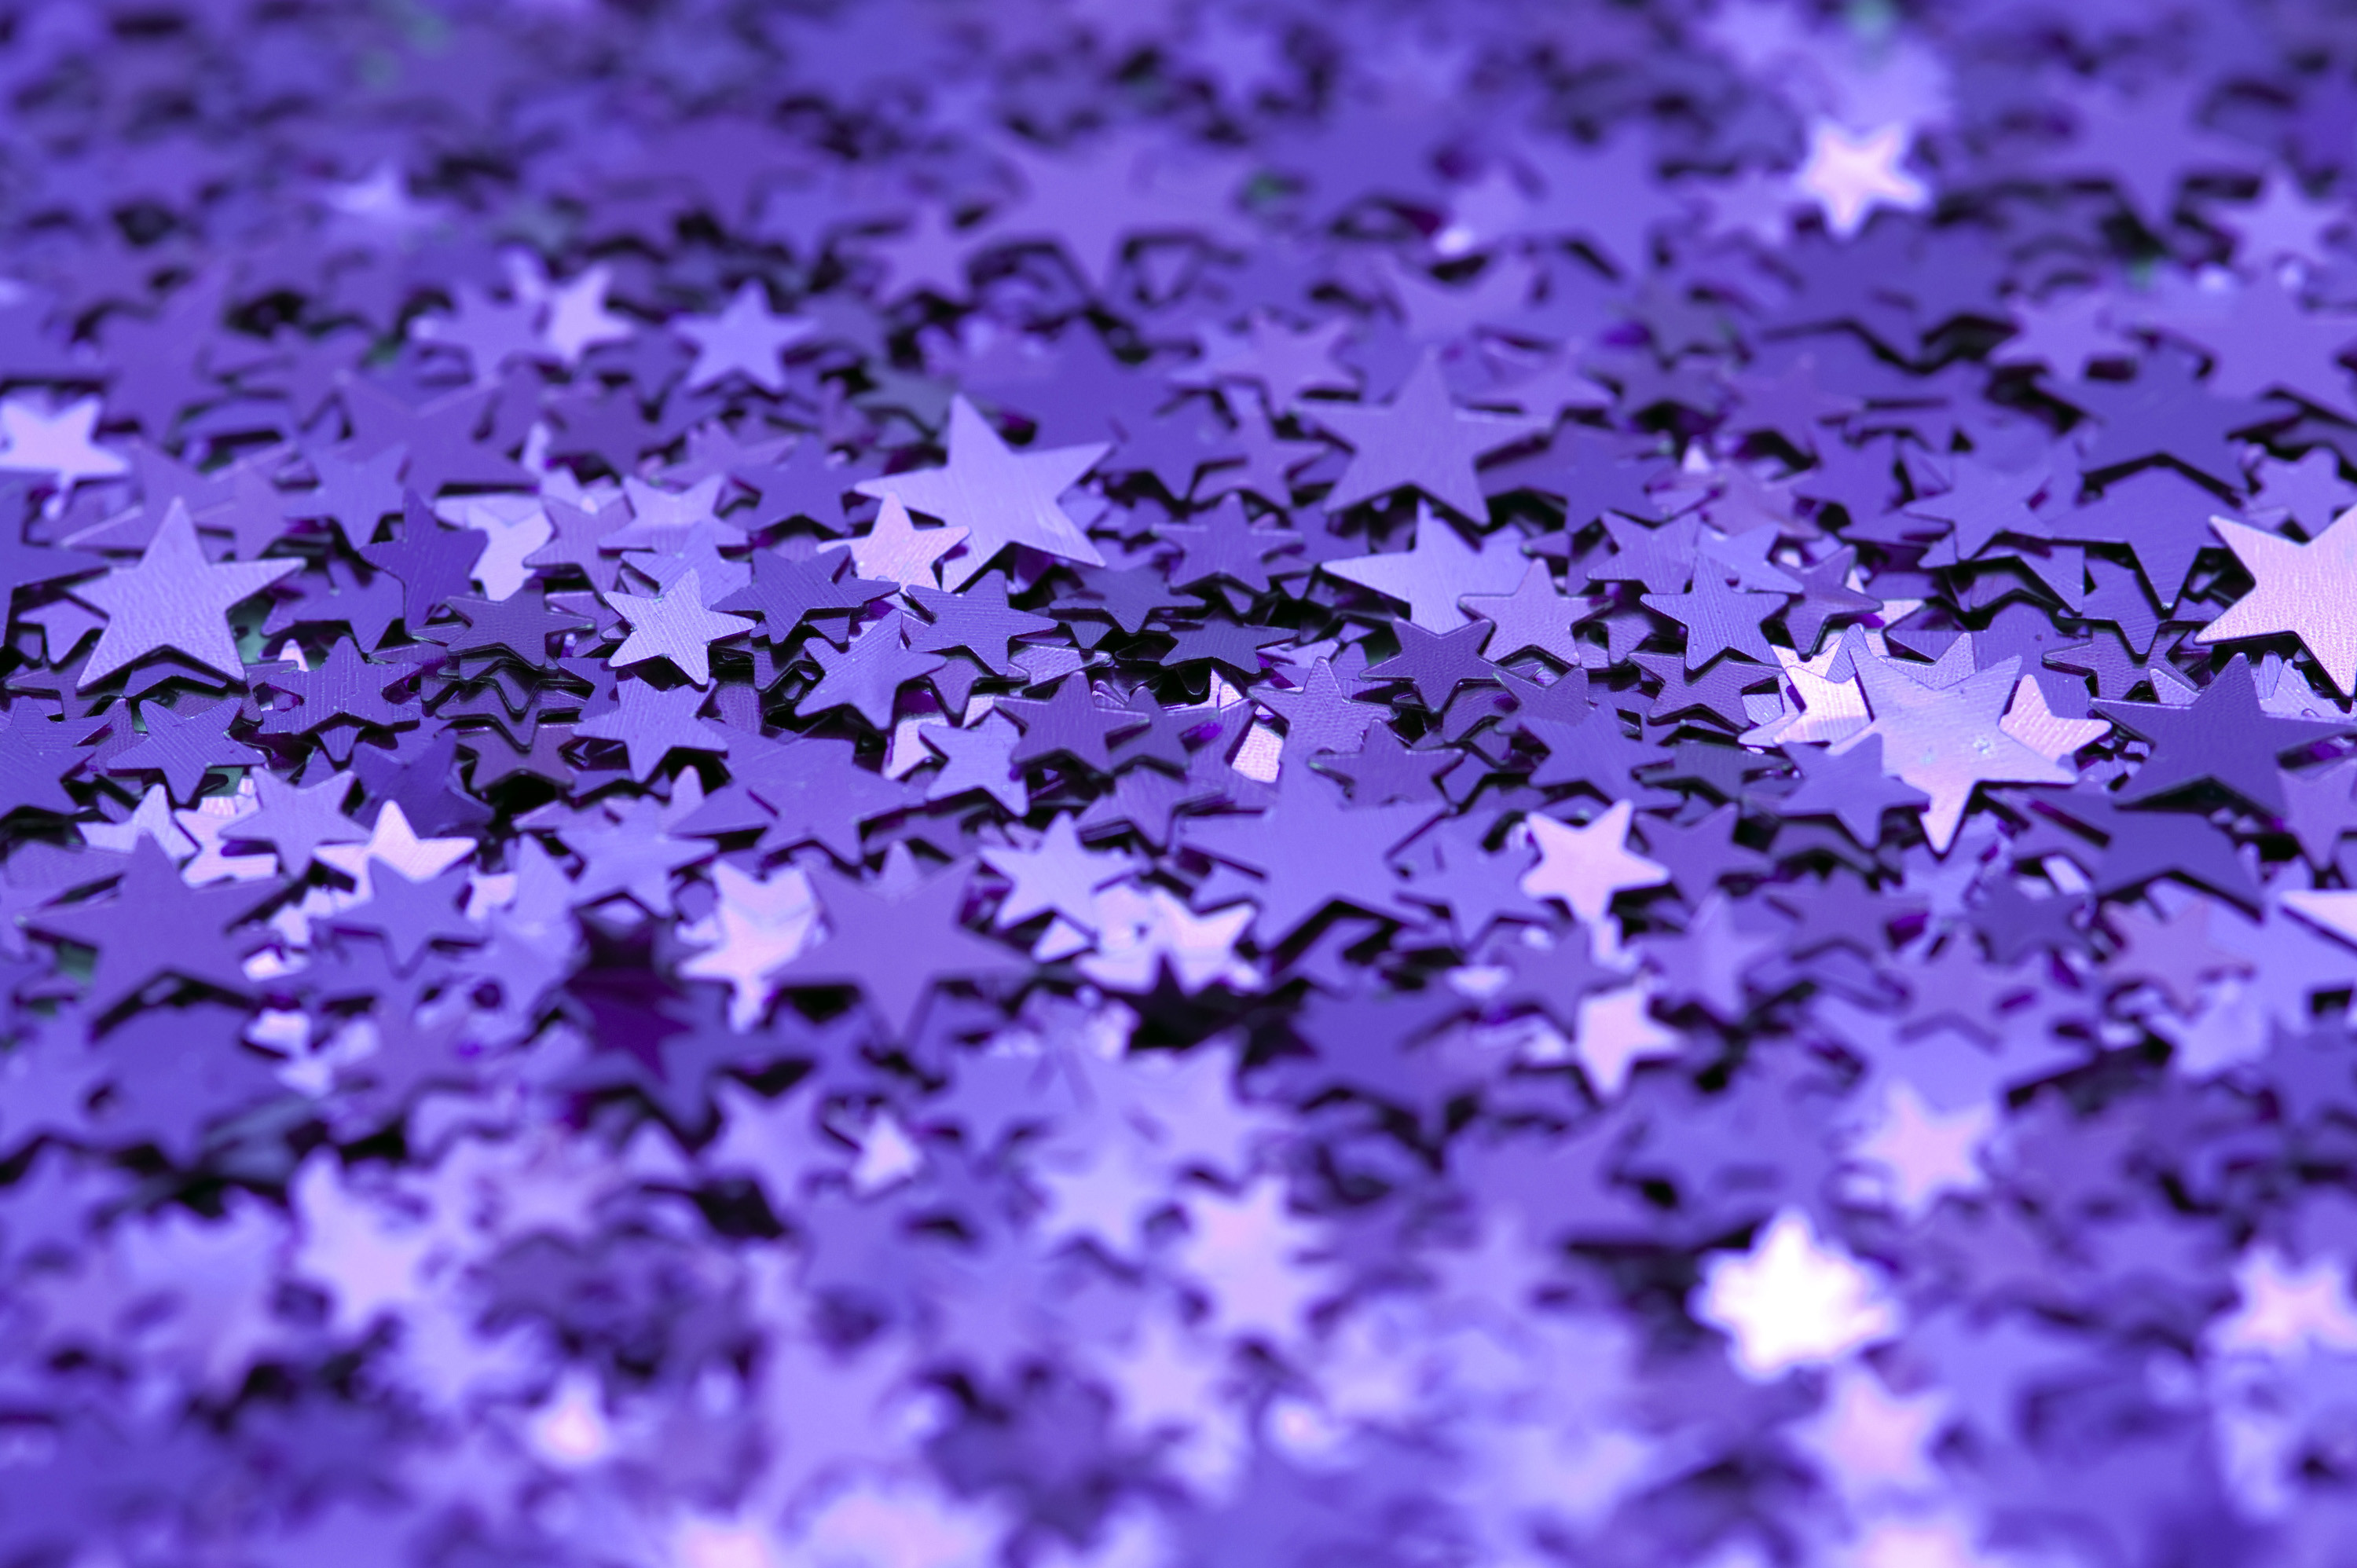 3000x1996 Download Original image of purple glitter backdrop [1116kB]